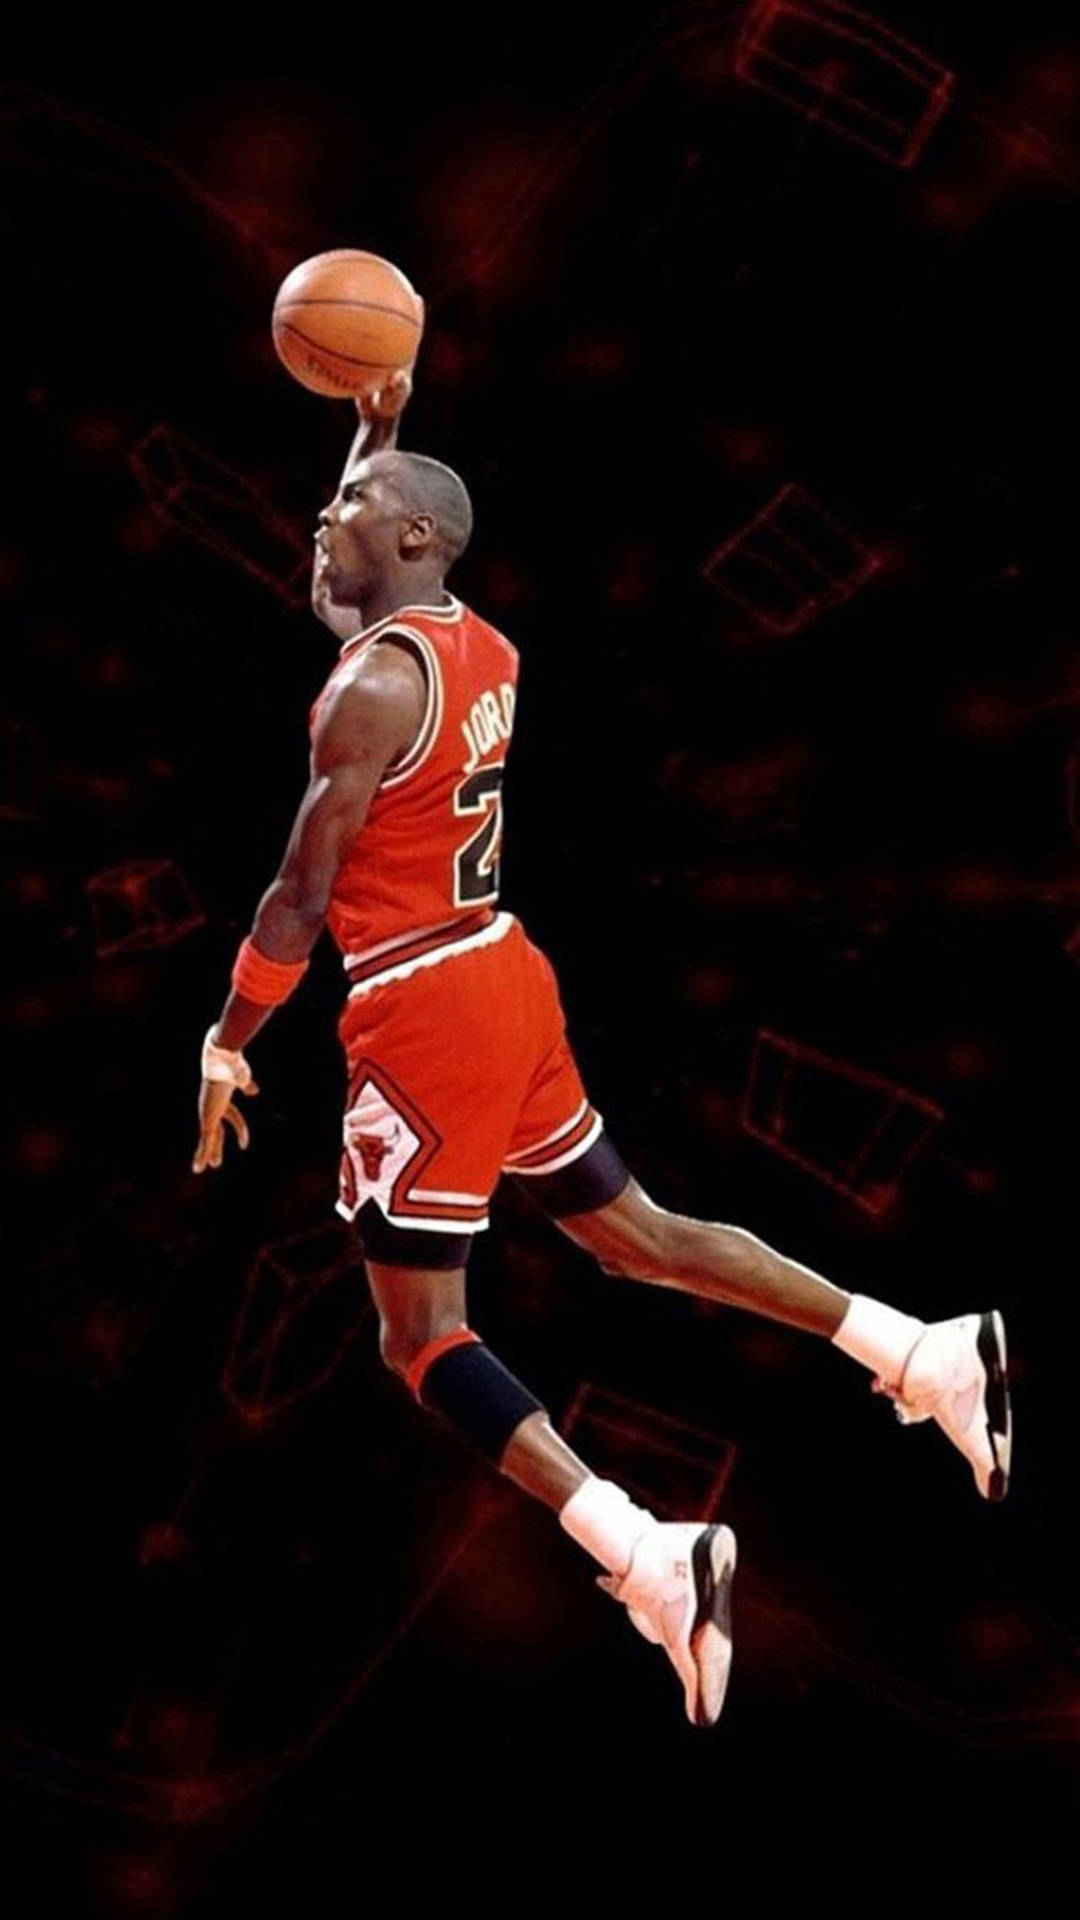 American Professional Basketball Player Michael Jordan Hanging Sports iPhone Wallpaper